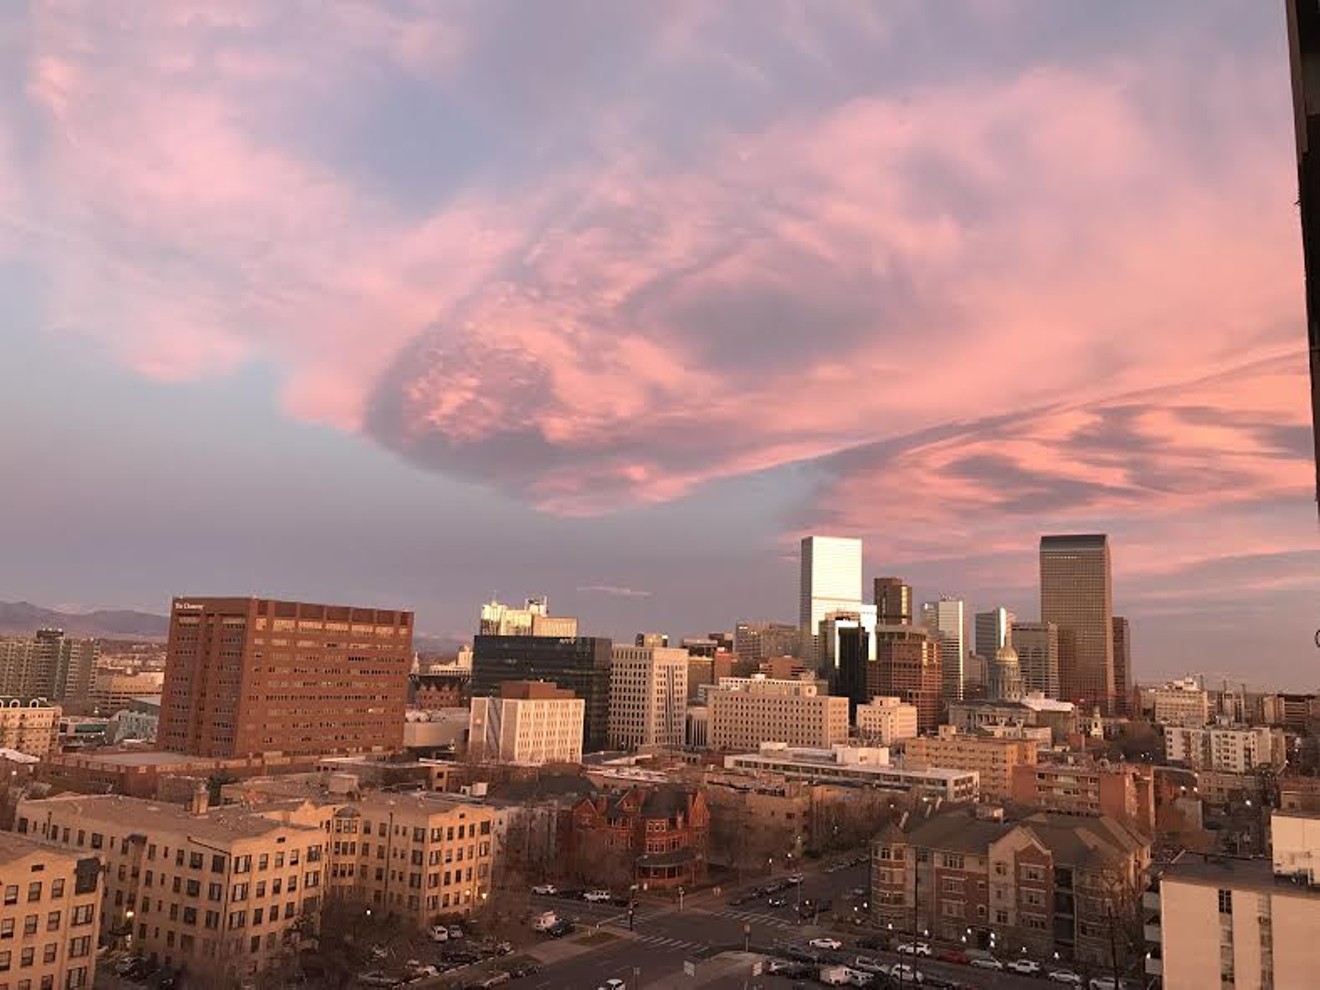 A fiery sunset over Denver on November 16.